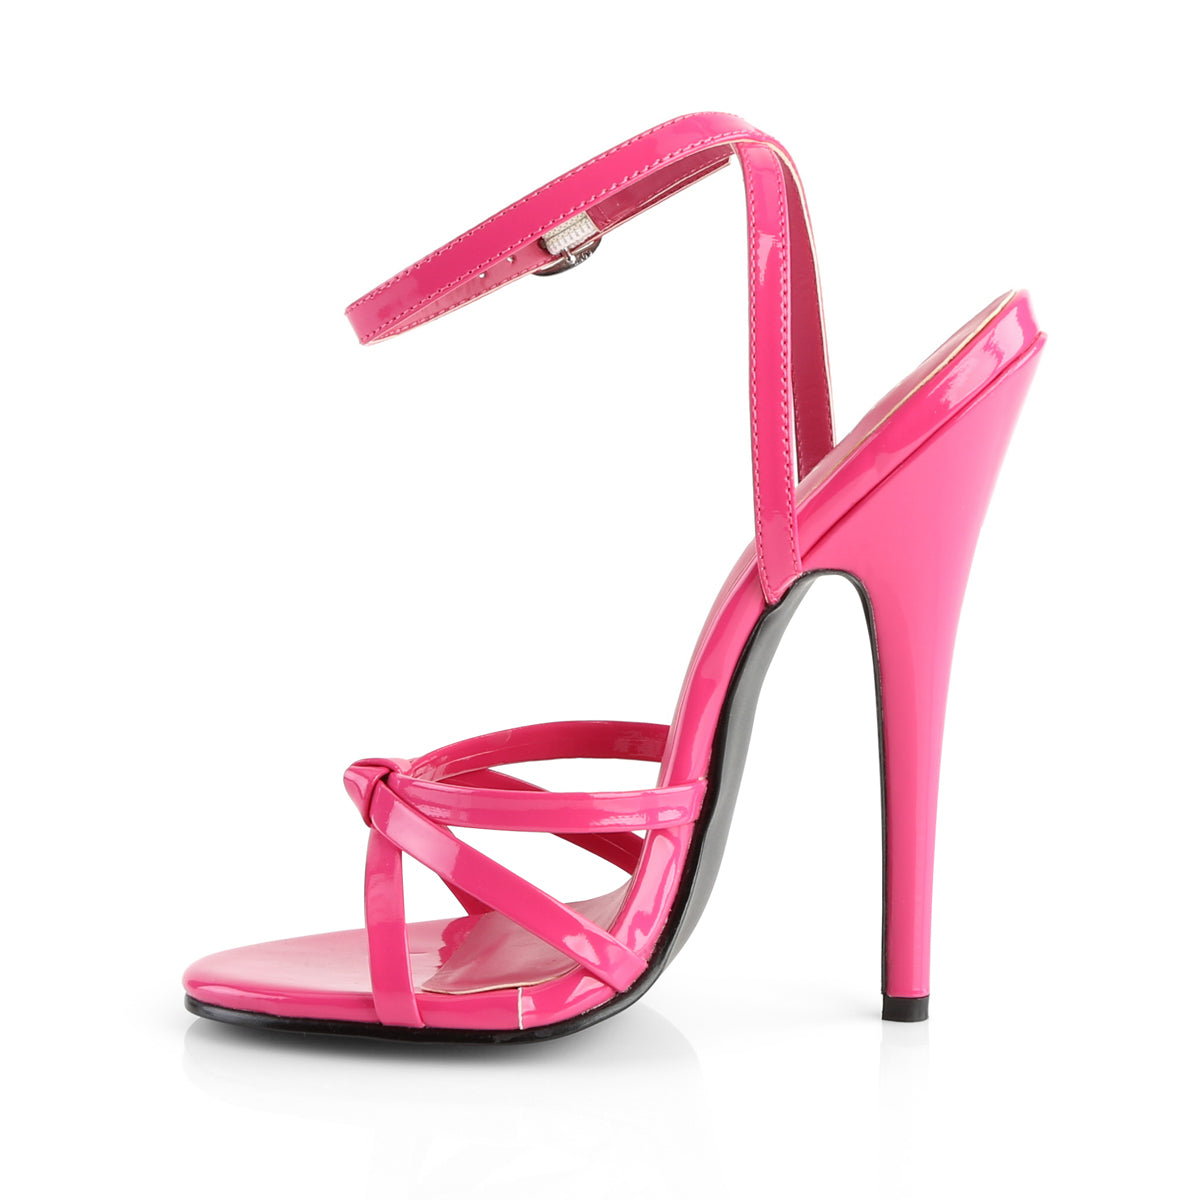 DOMINA 108 Devious Fetish Footwear 6 Inch Heel Hot Pink Shoe Devious Heels Pole Dance Heels